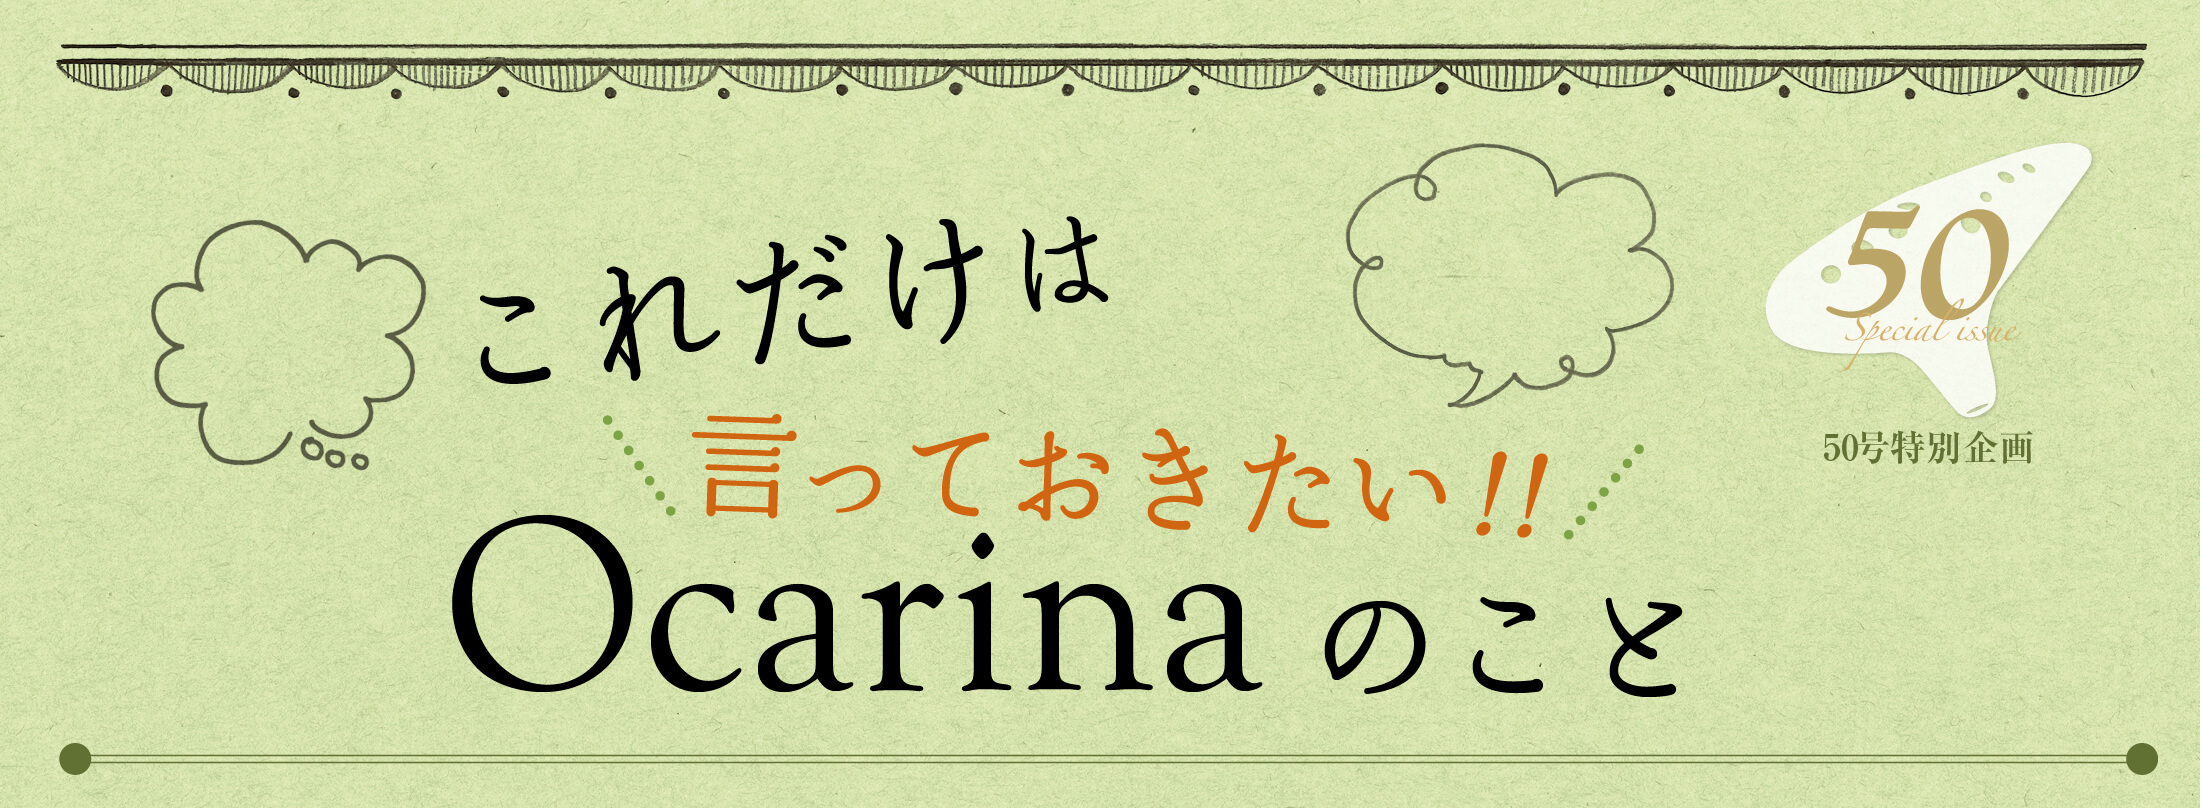 Ocarina magazine